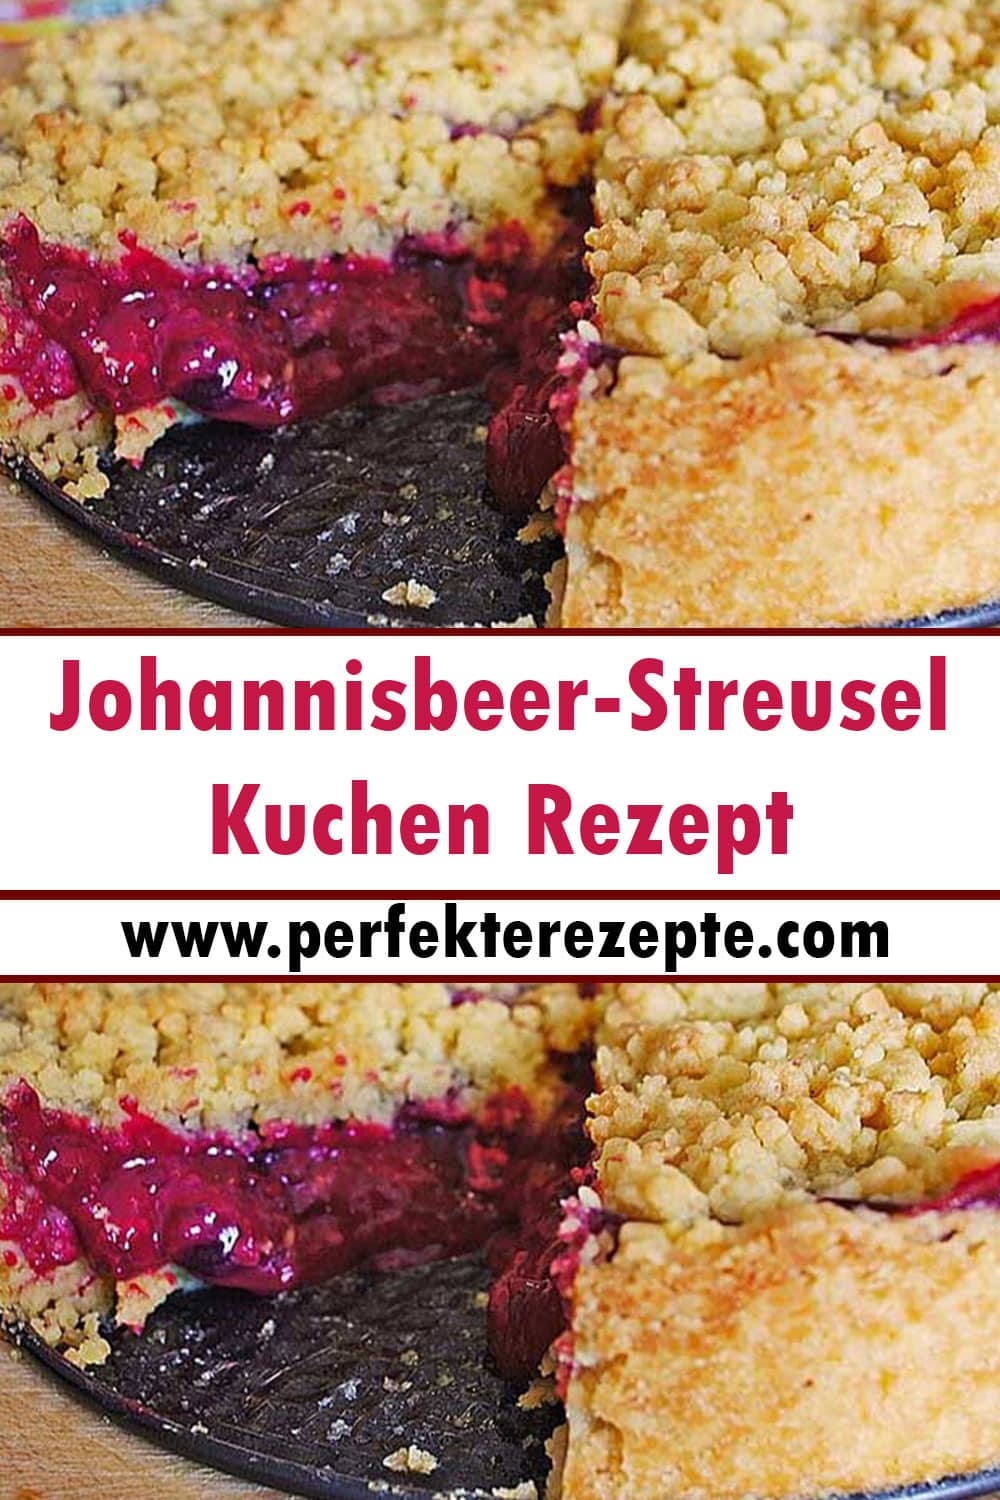 Johannisbeer-Streusel-Kuchen Rezept